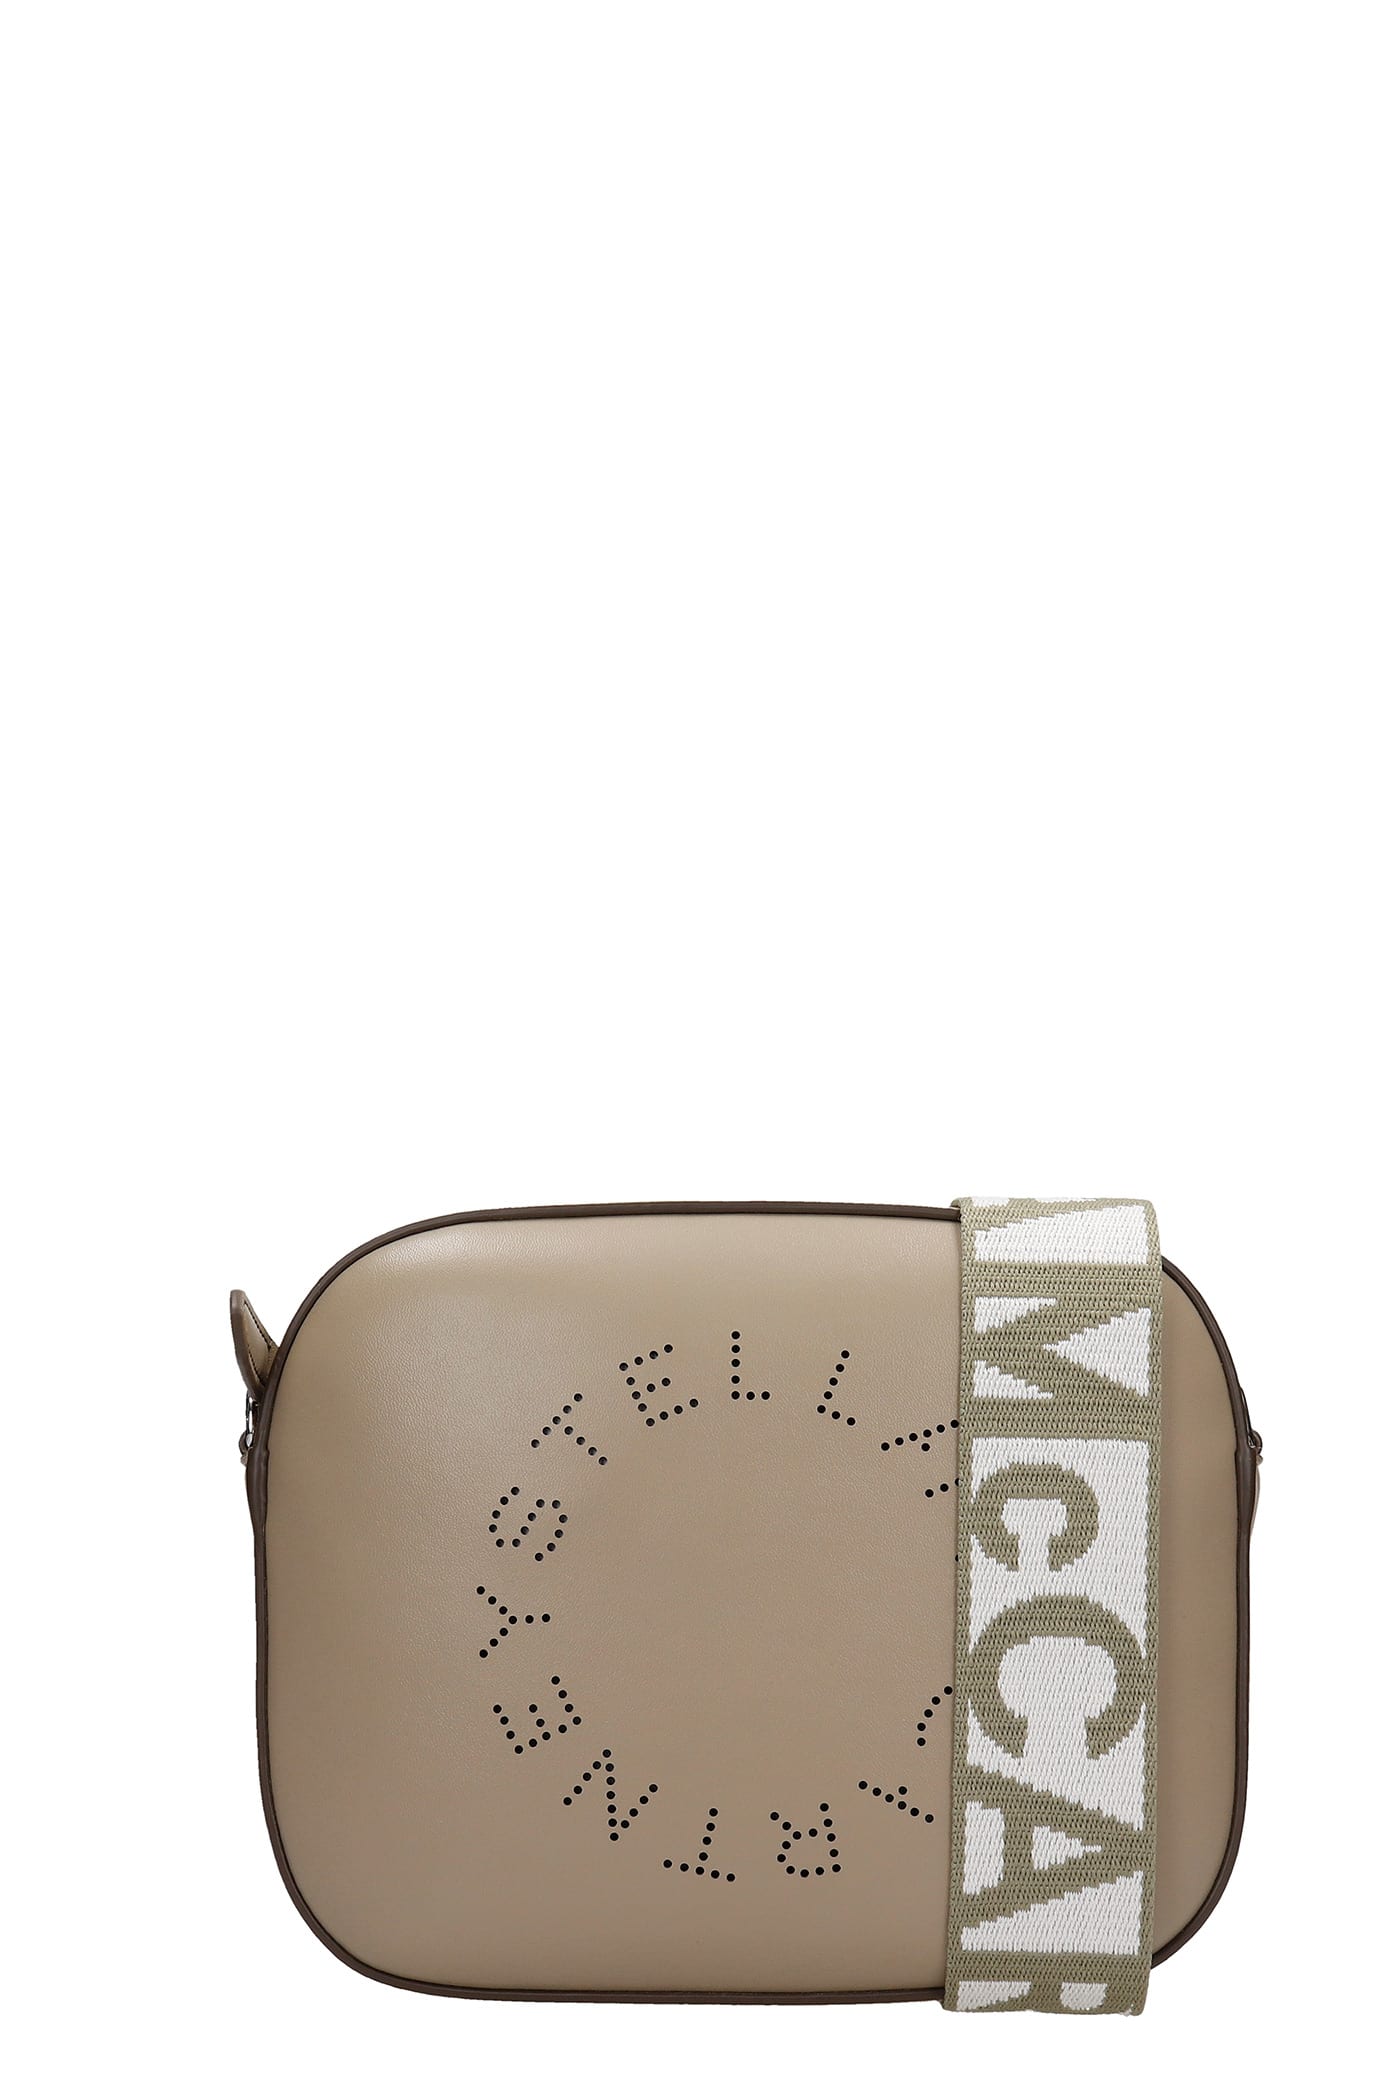 Stella McCartney Shoulder Bag In Green Faux Leather